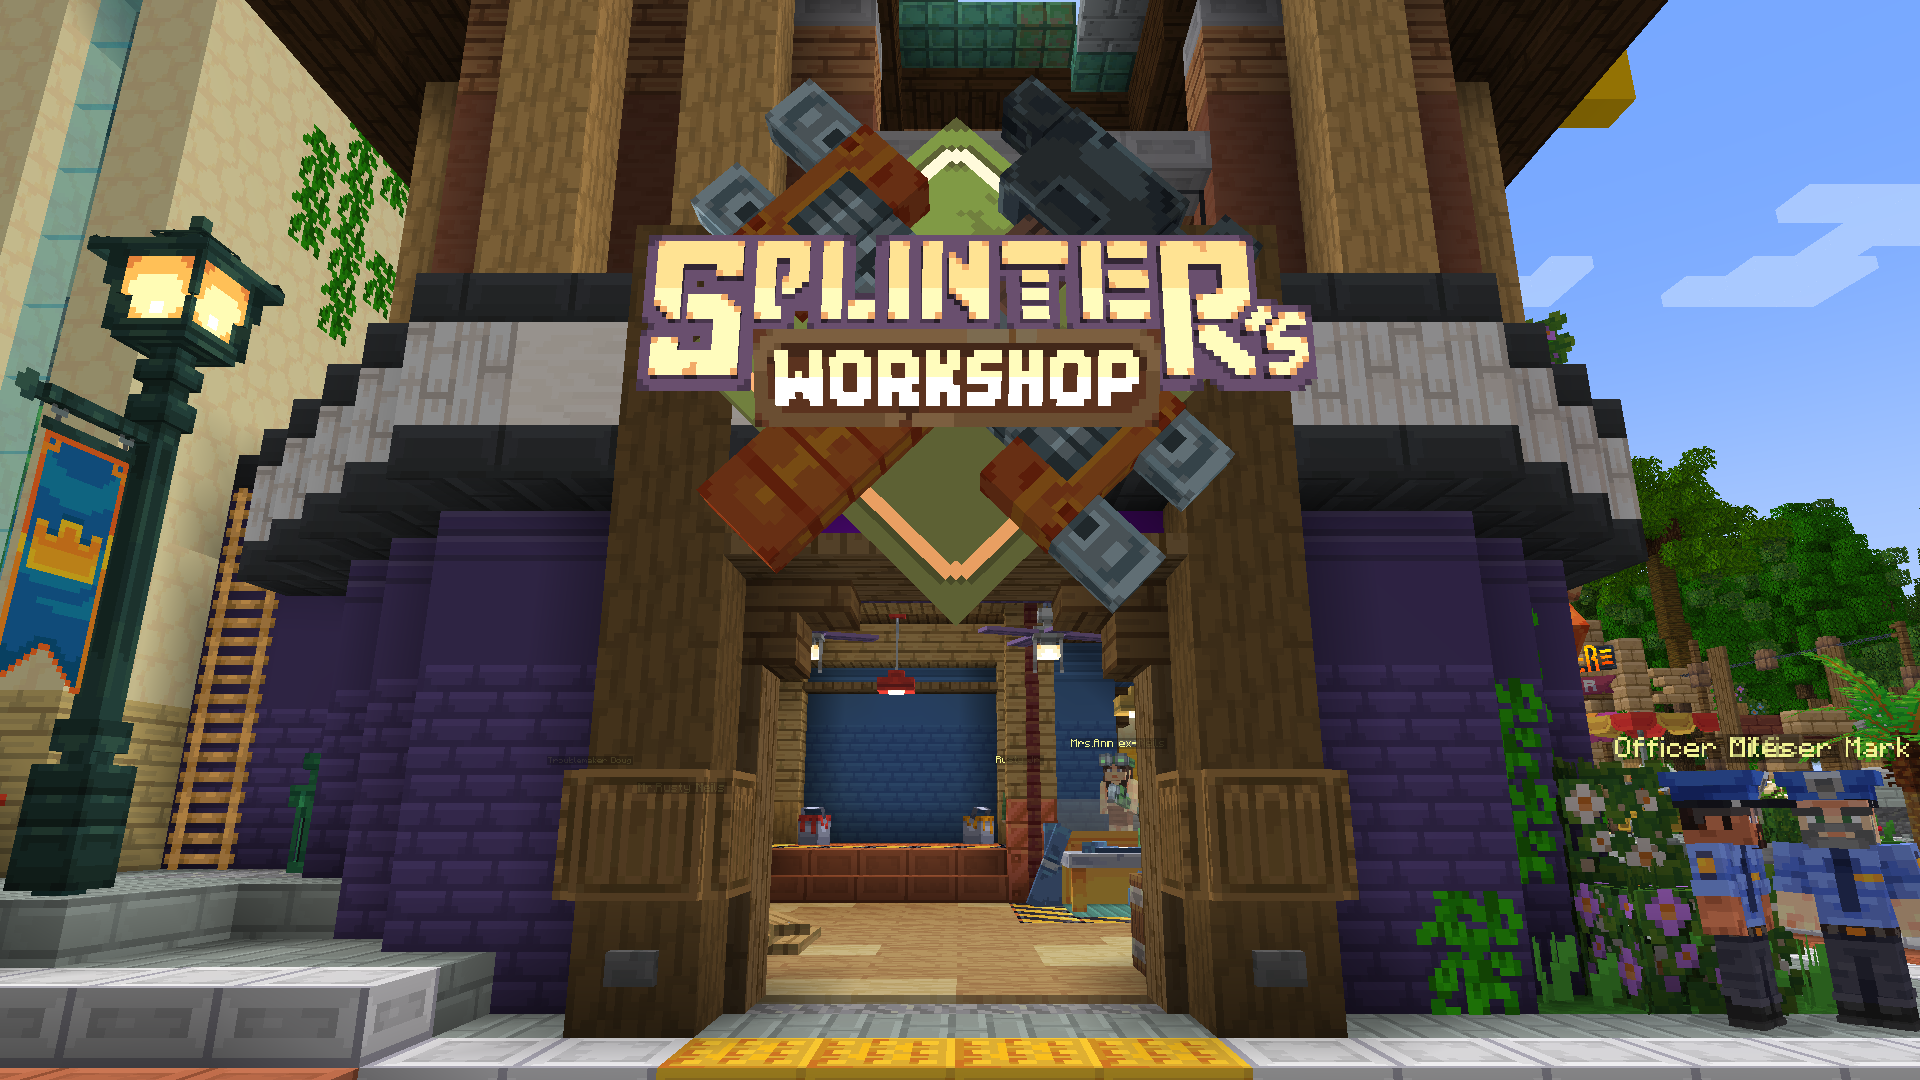 Splinters_Workshop_Exterior.png